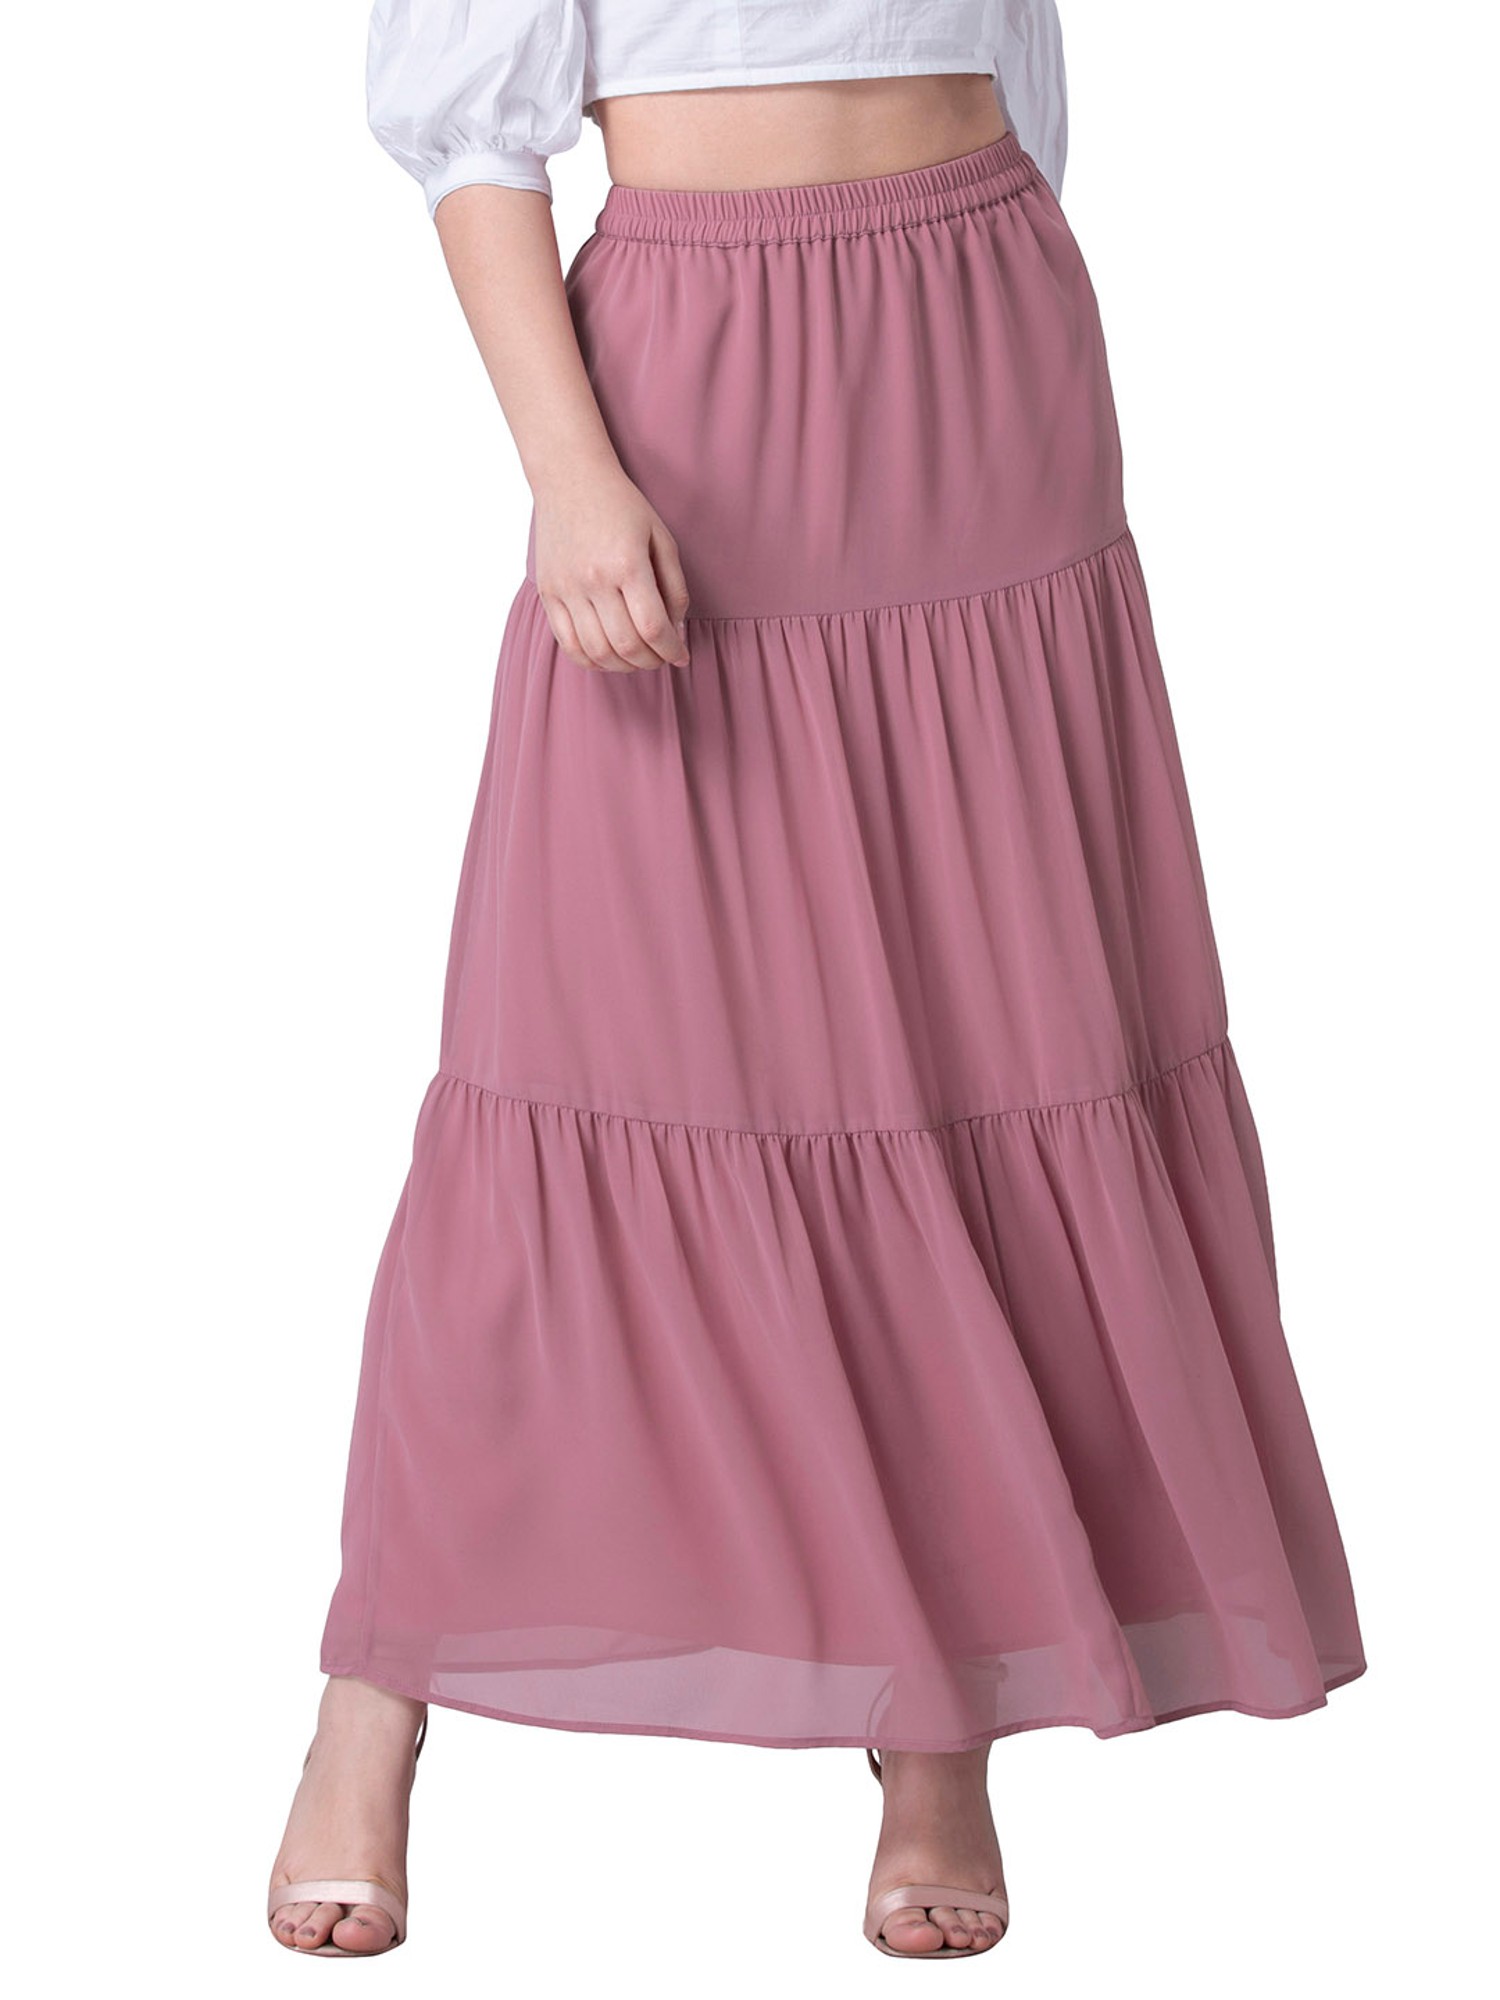 Faballey Skirts  Buy Faballey Beige Polka Belted Midi Skirt Online  Nykaa  Fashion